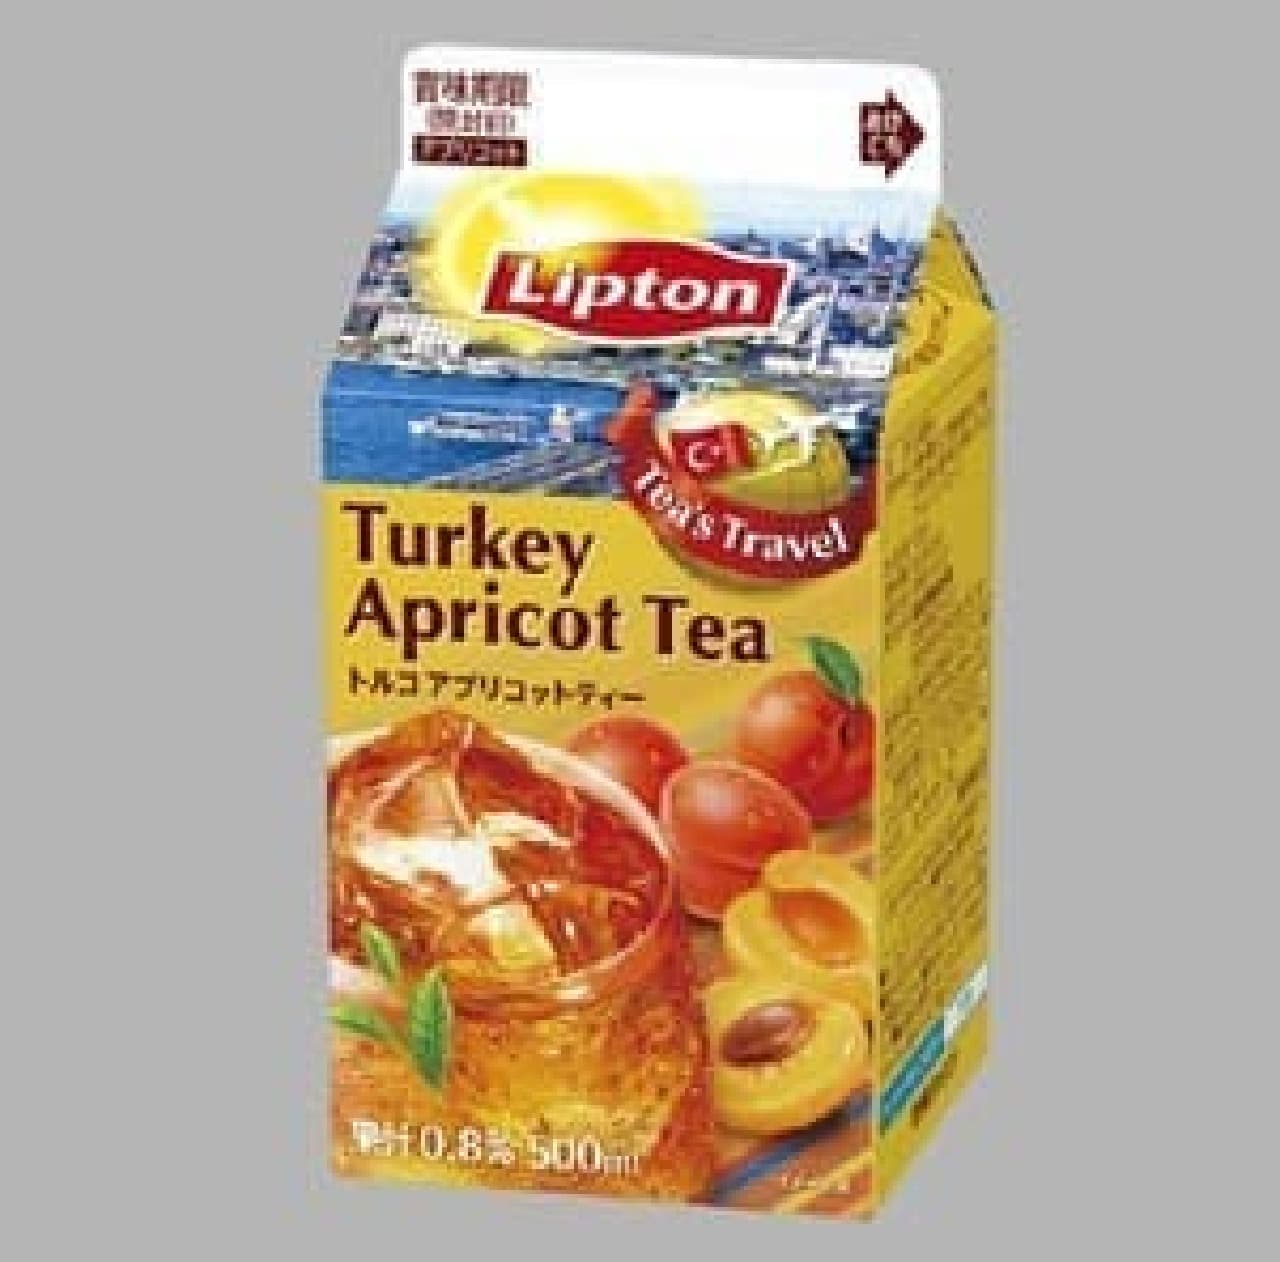 The fourth is Turkey "Apricot Tea"